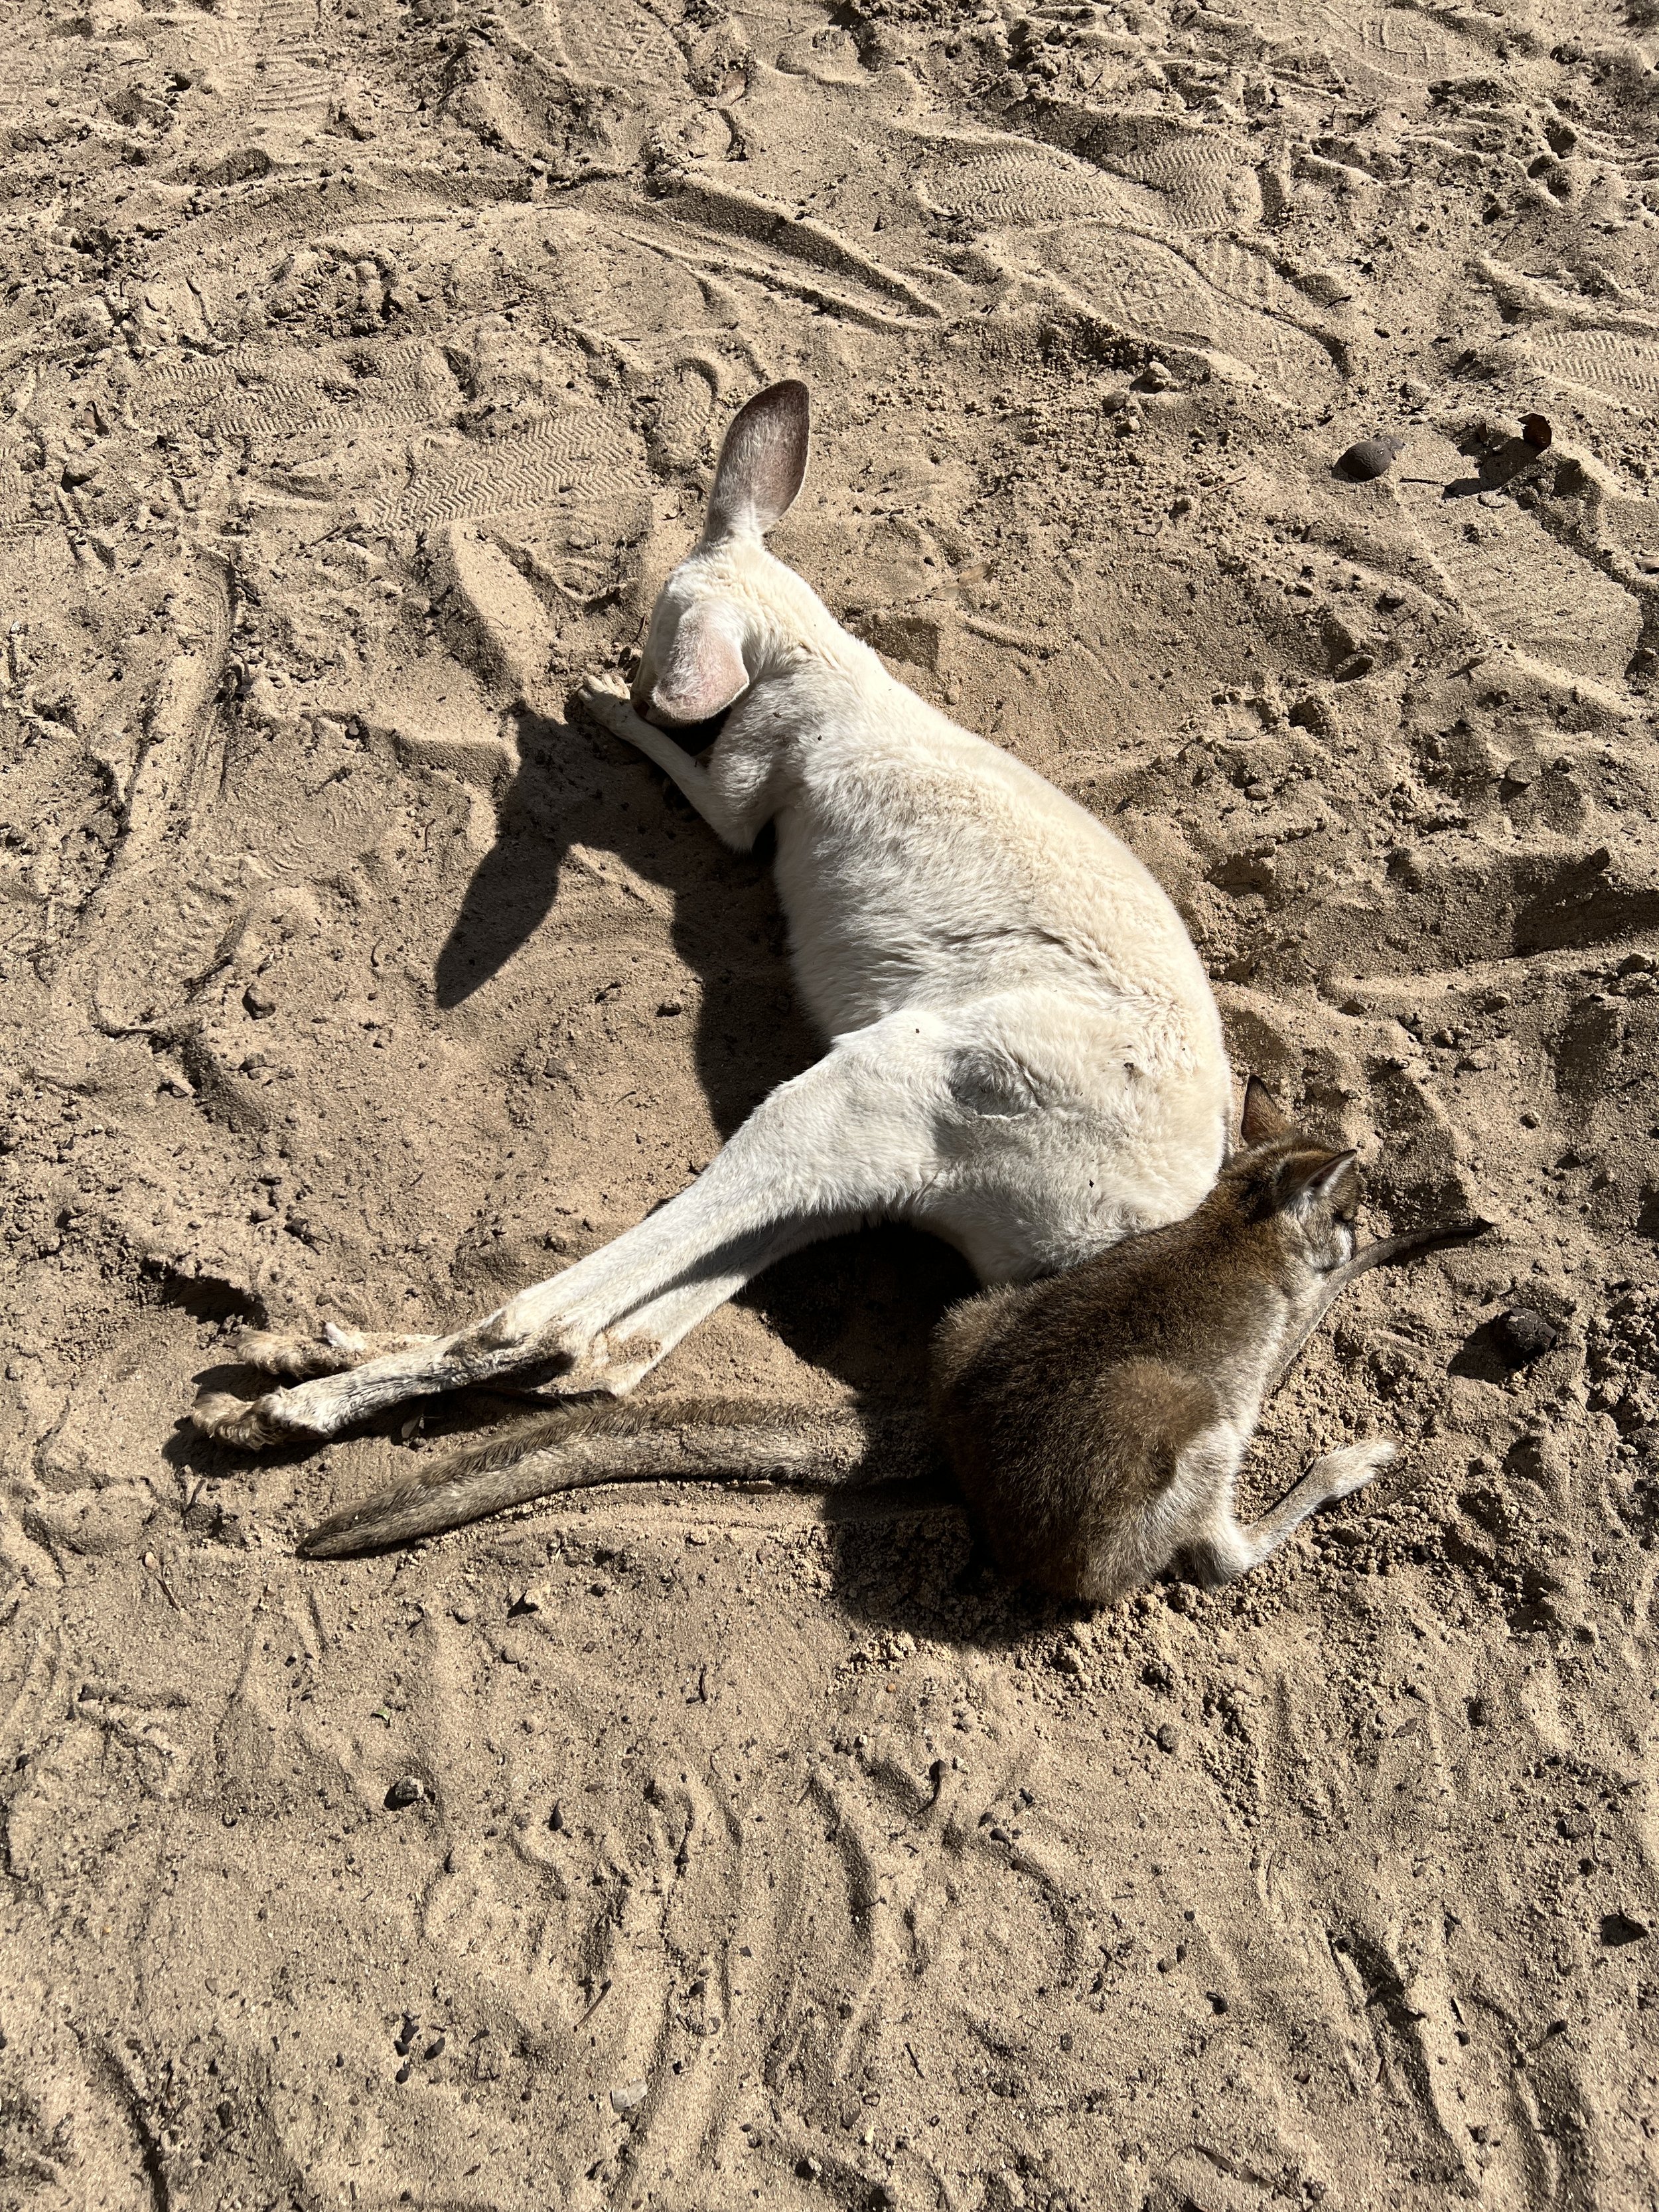 White kangaroo and a small wallaby